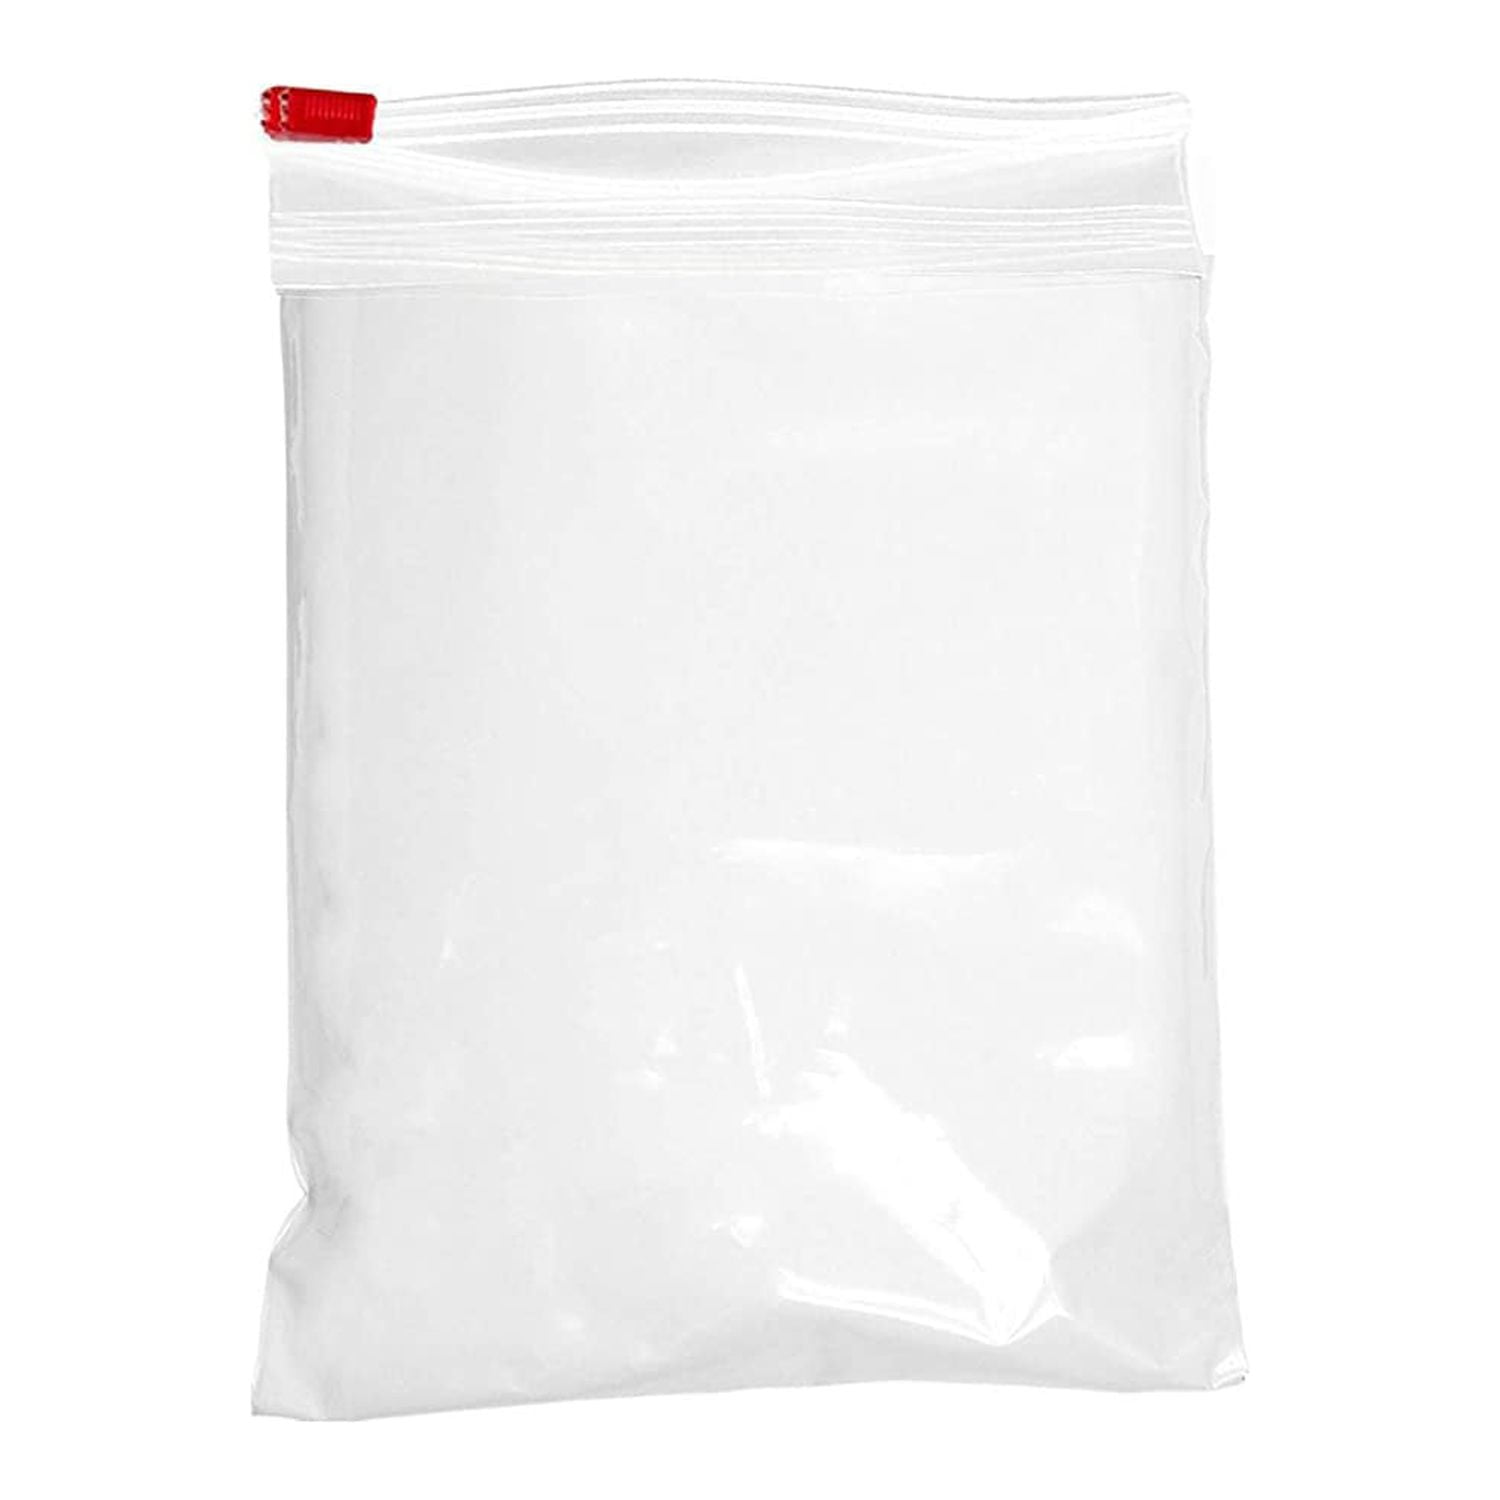 M02909 MOREZMORE 100 Ziplock Bags 6x9 Clear Plastic Zip Lock Bag 6 x 9 6 x